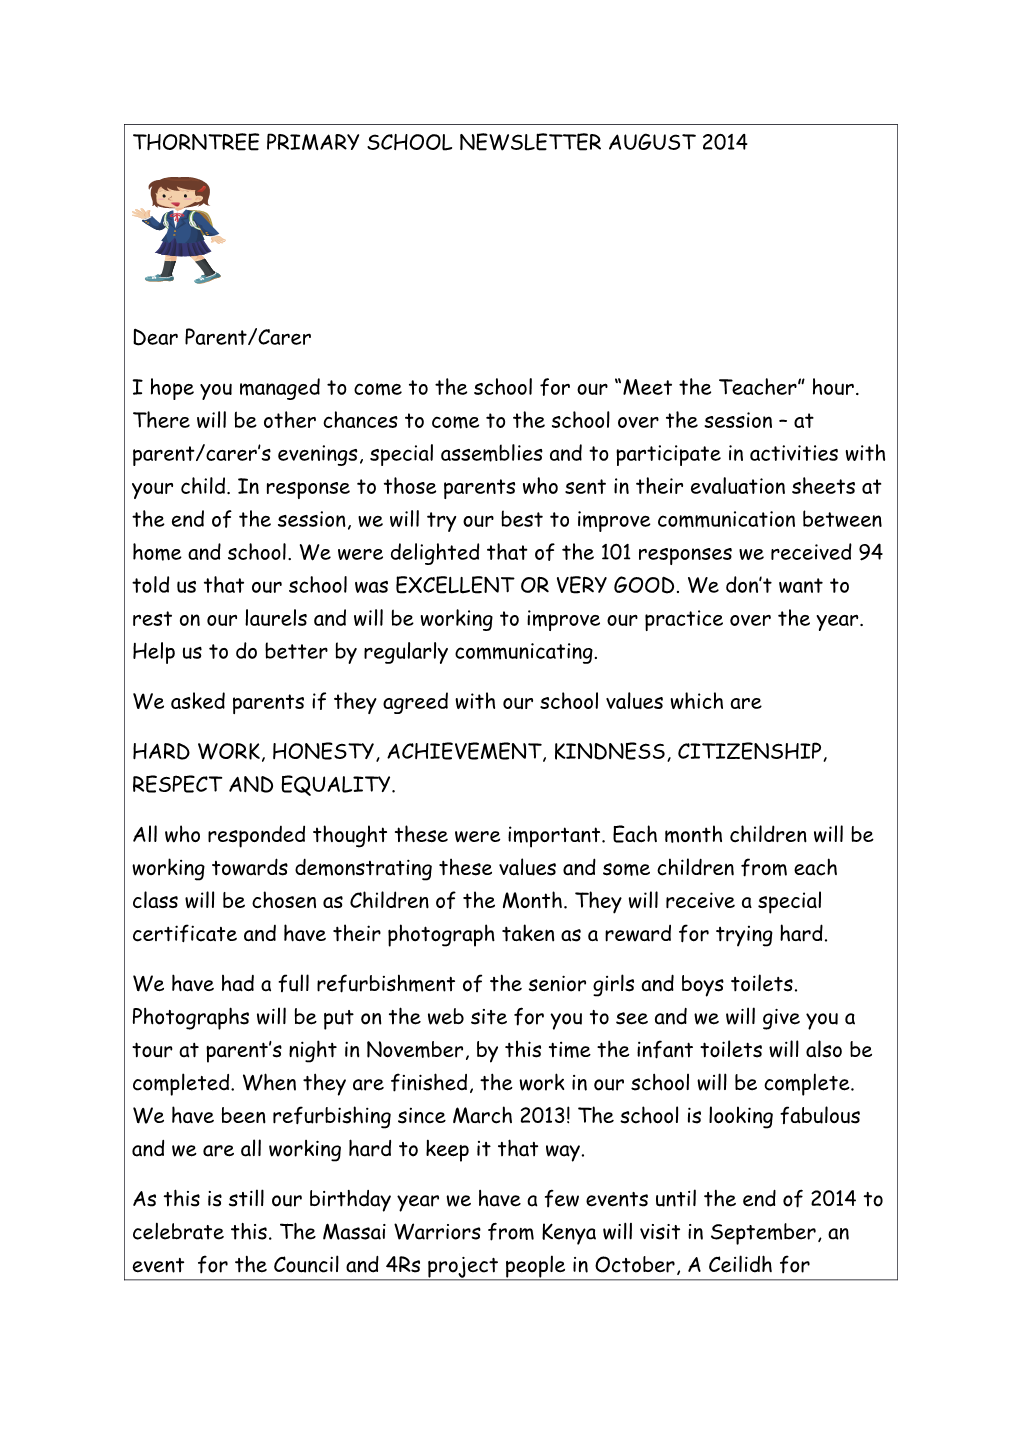 Thorntree Primary School Newsletter August 2014